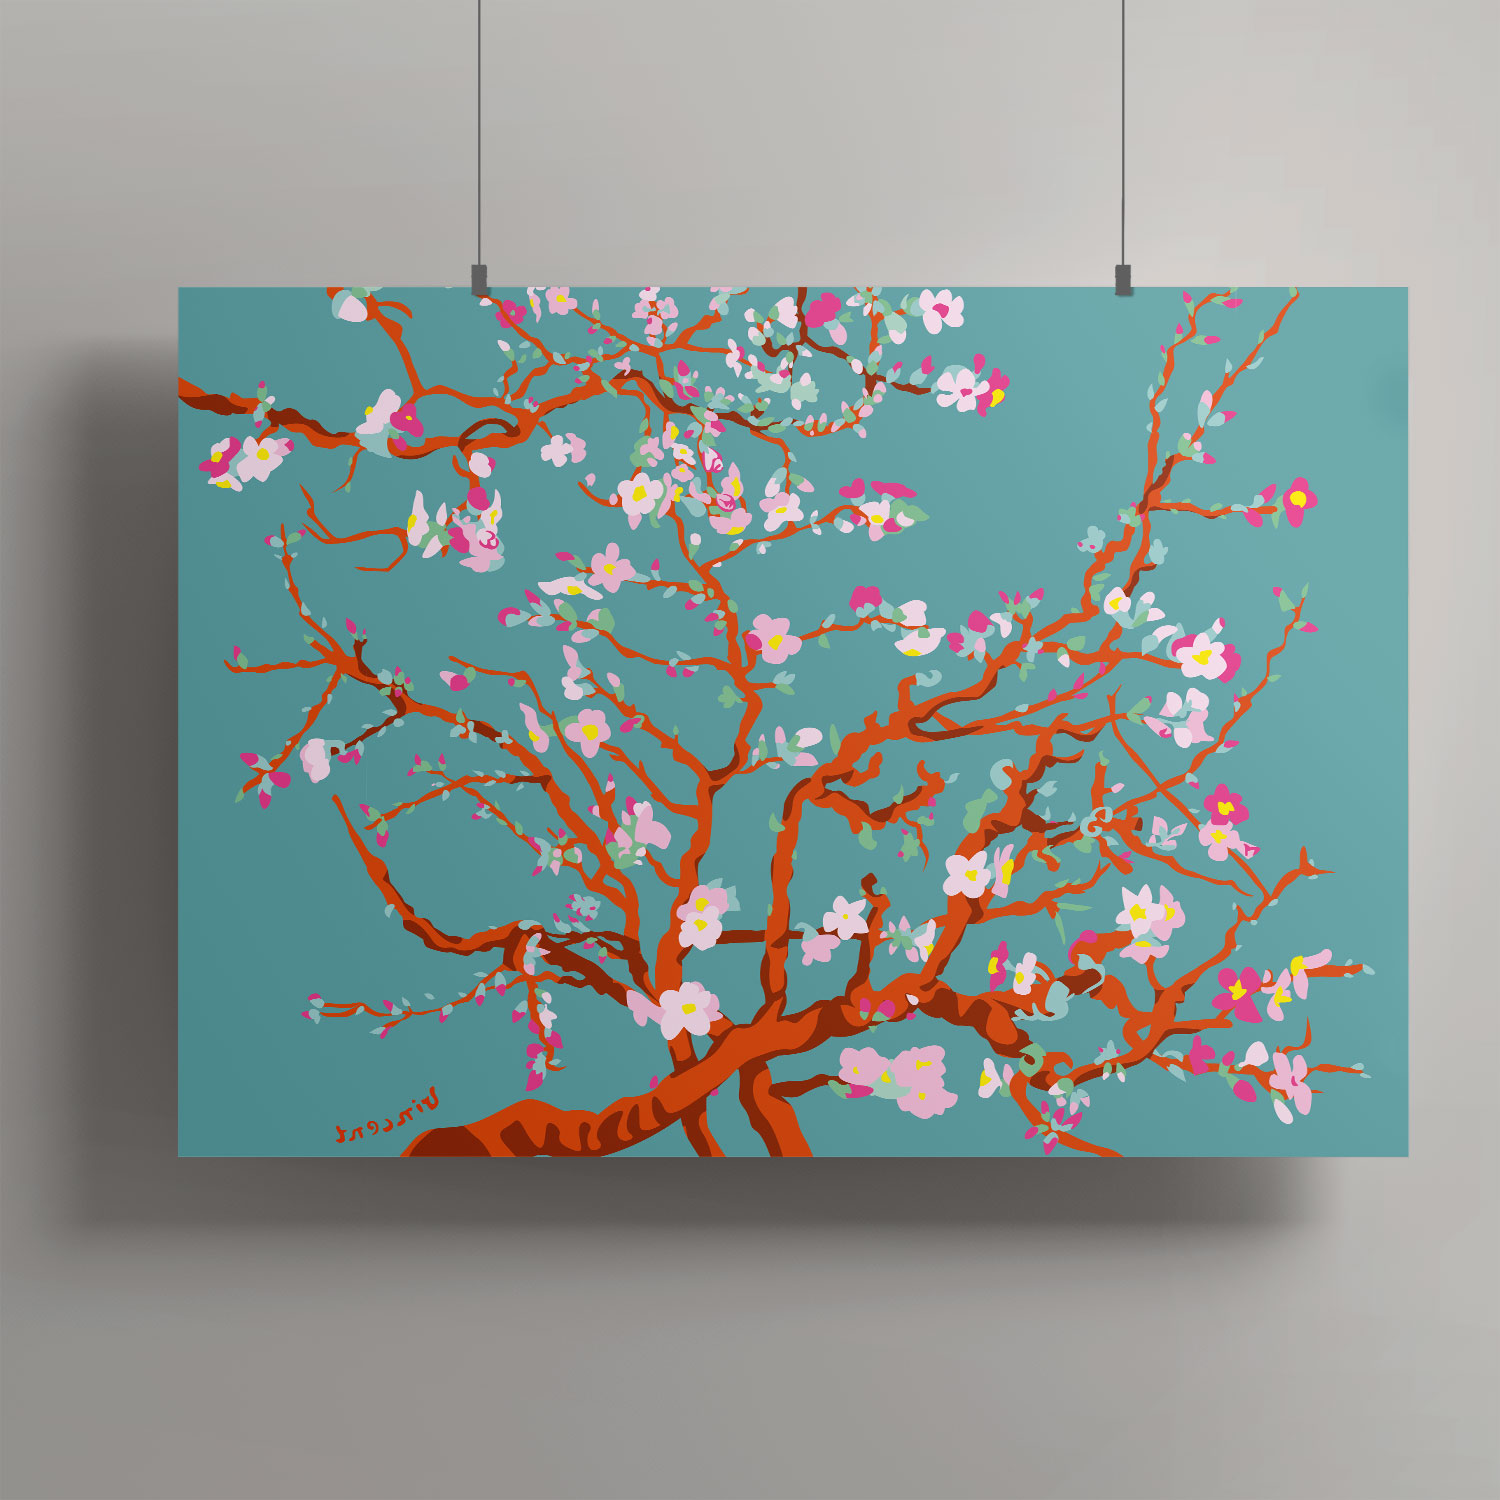 Artprint A3 - Almond Blossom, van Gogh